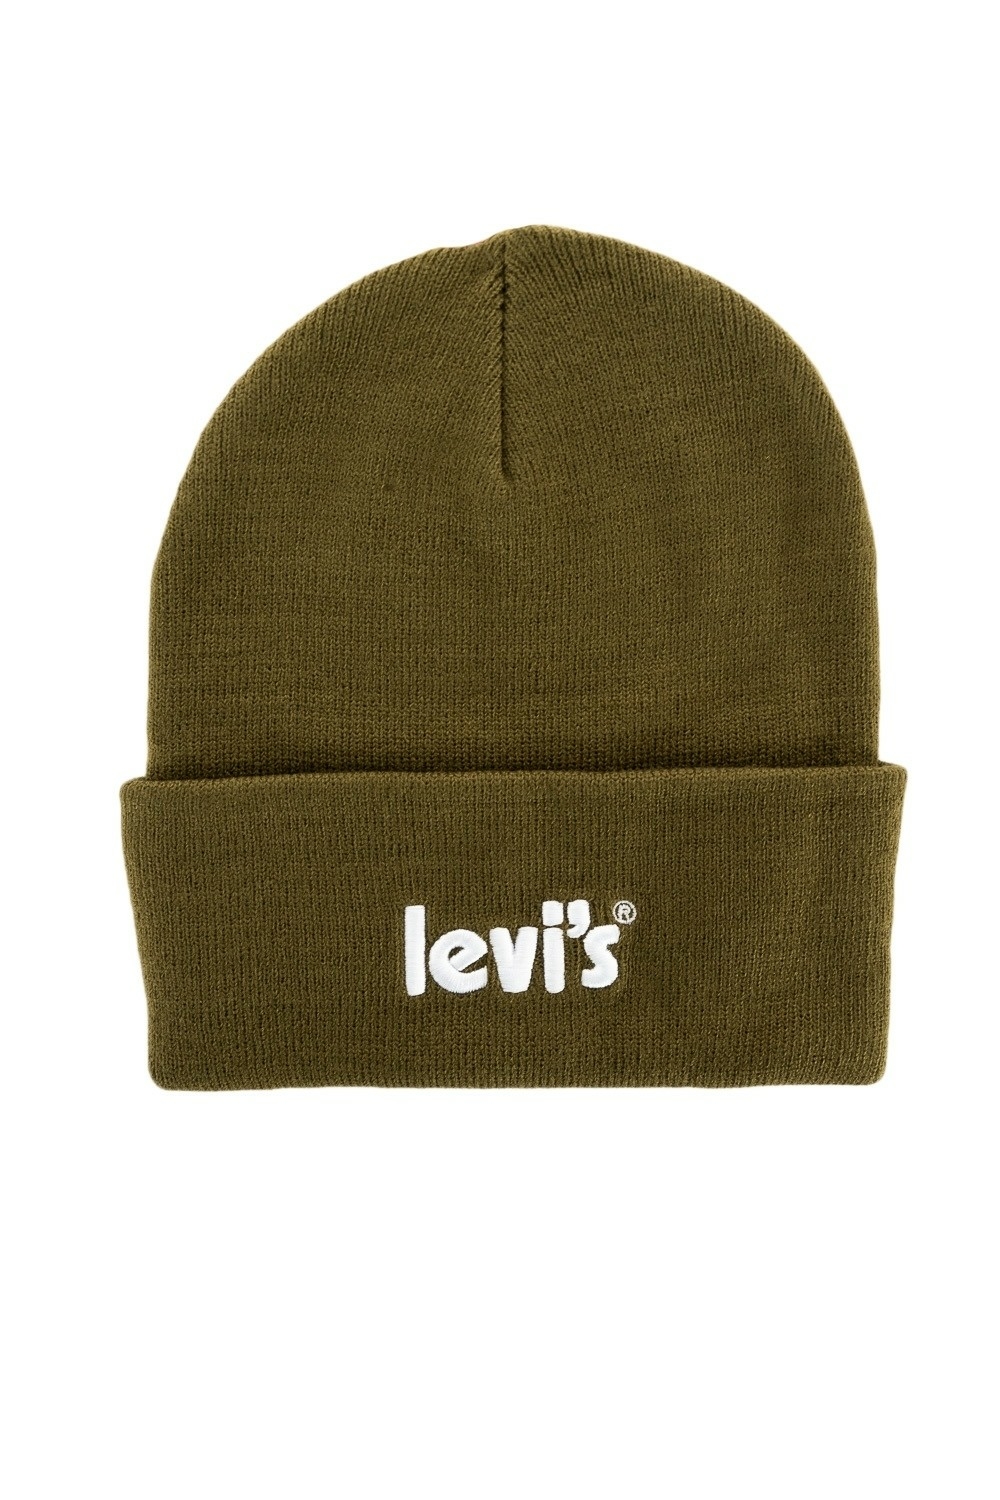 Levi's® - poster logo - bonnet vert - Jeanstation.fr